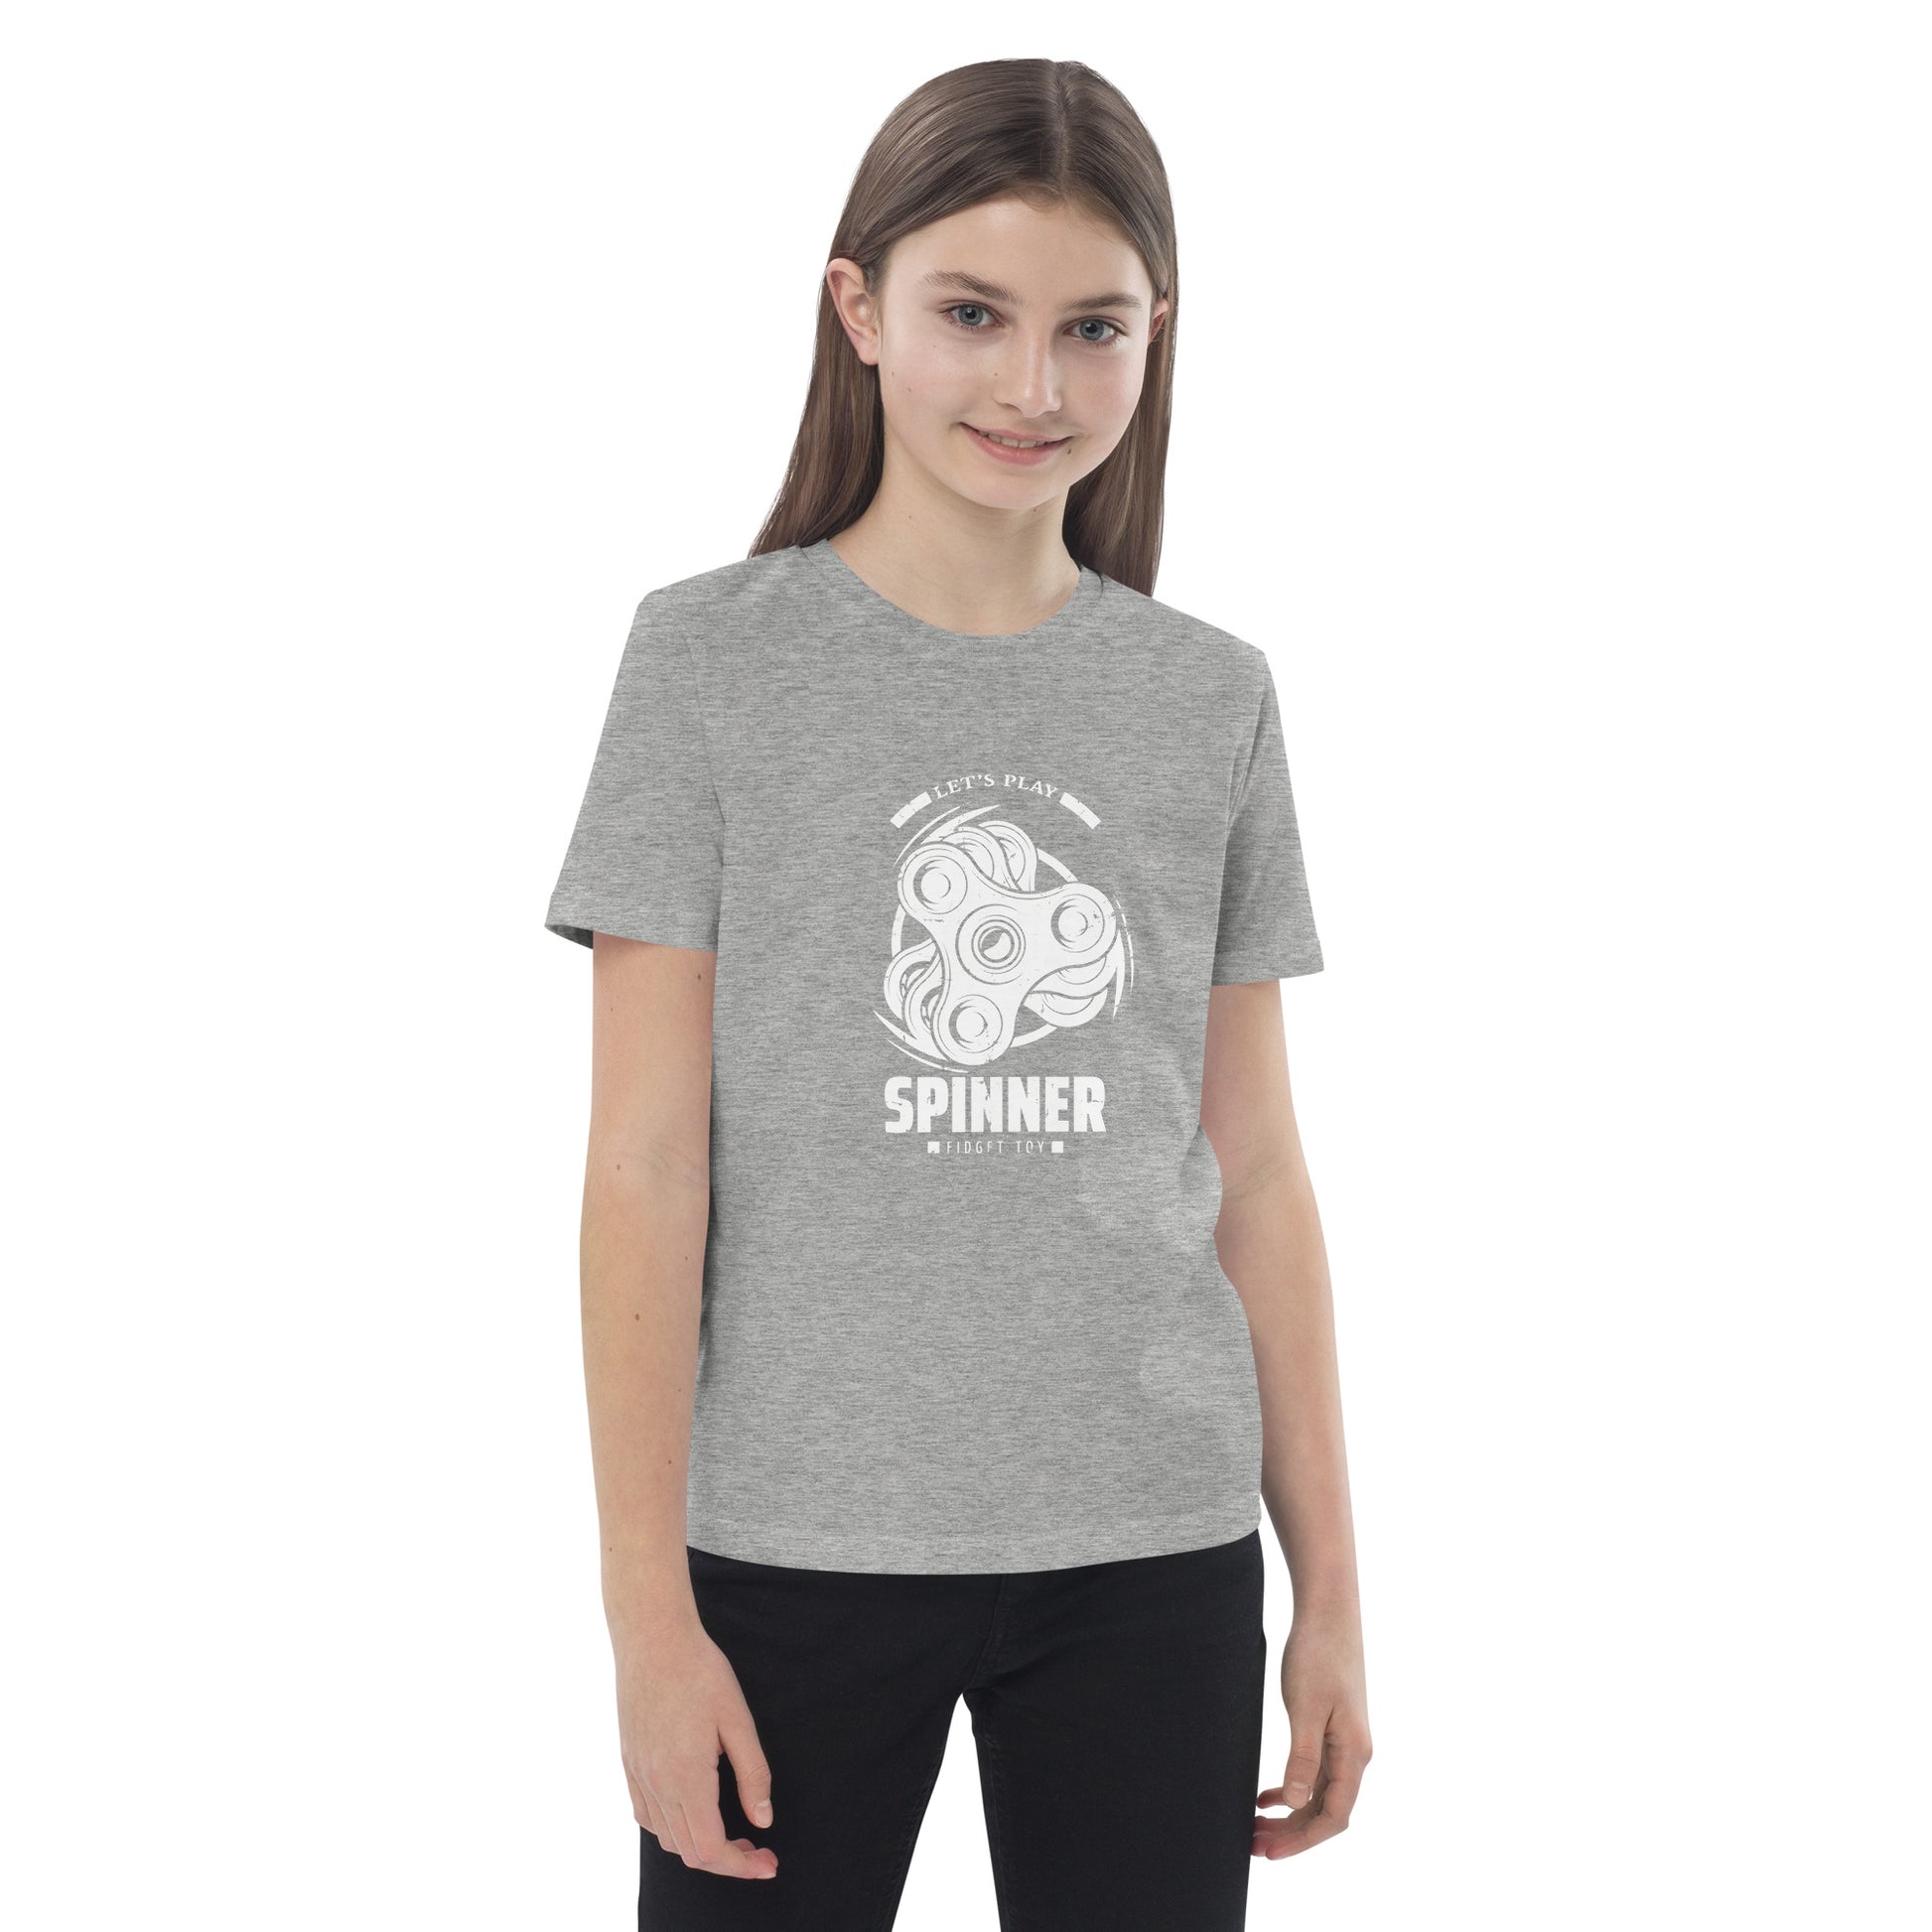 Spinner - Organic cotton kids t-shirt - HobbyMeFree